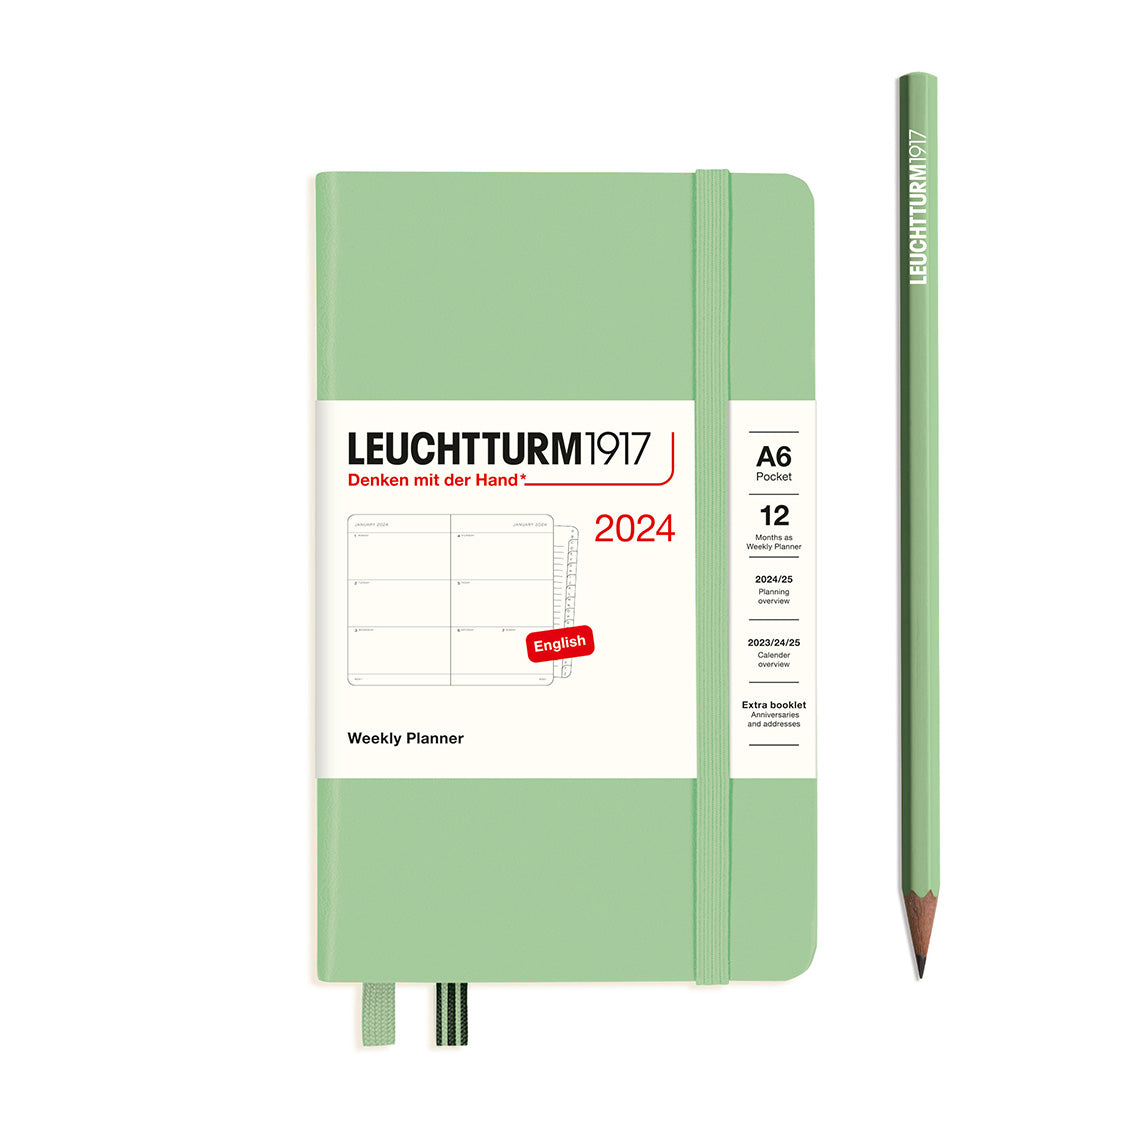 Leuchtturm Weekly Planner - Pocket (A6) 3 1/2" x 6"